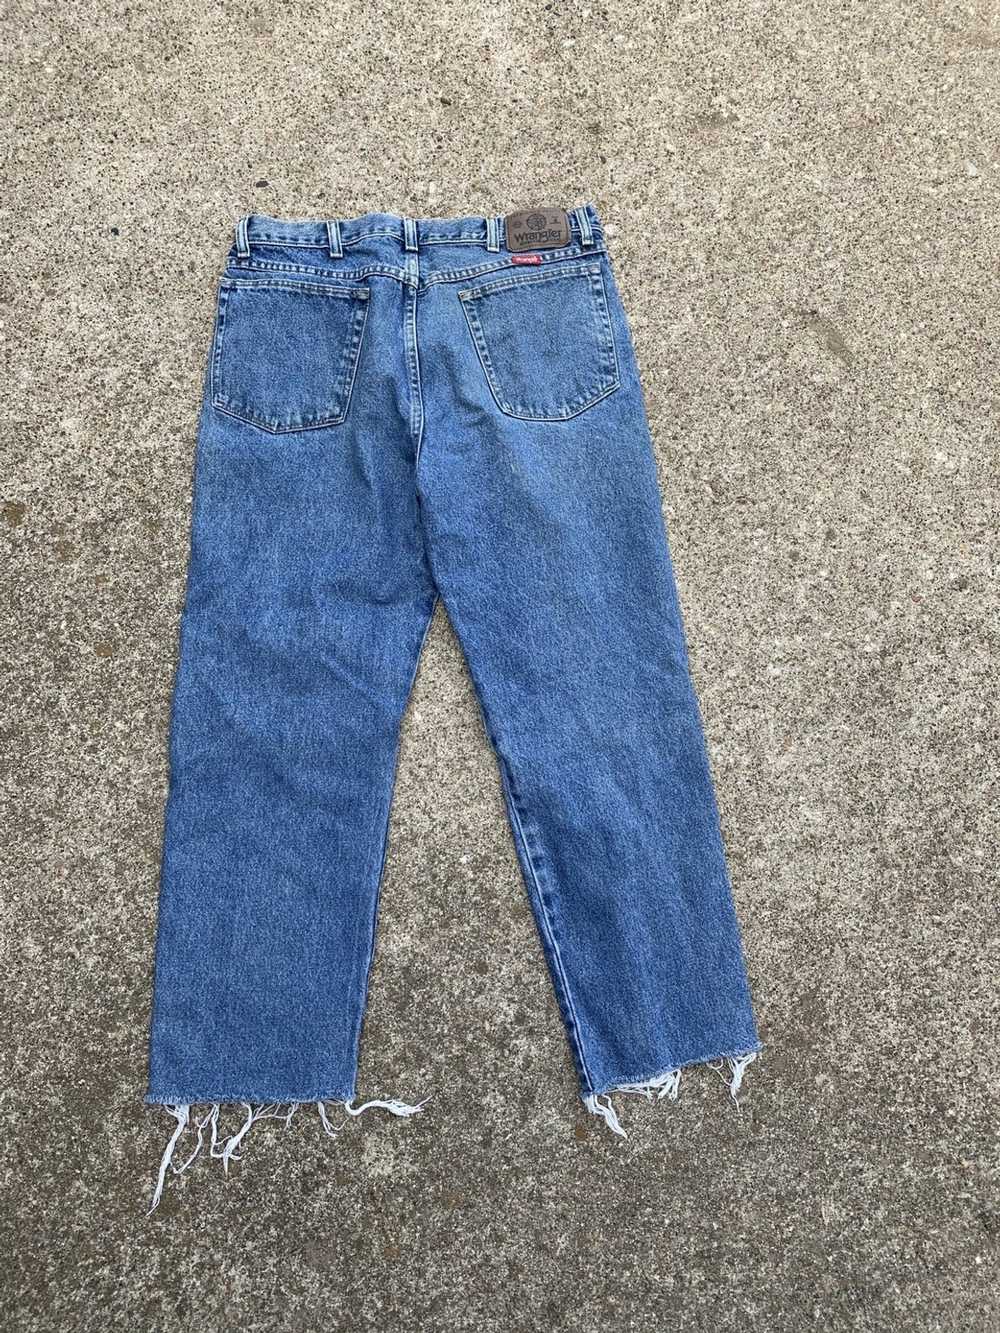 Vintage × Wrangler Cropped wrangler jeans - image 2